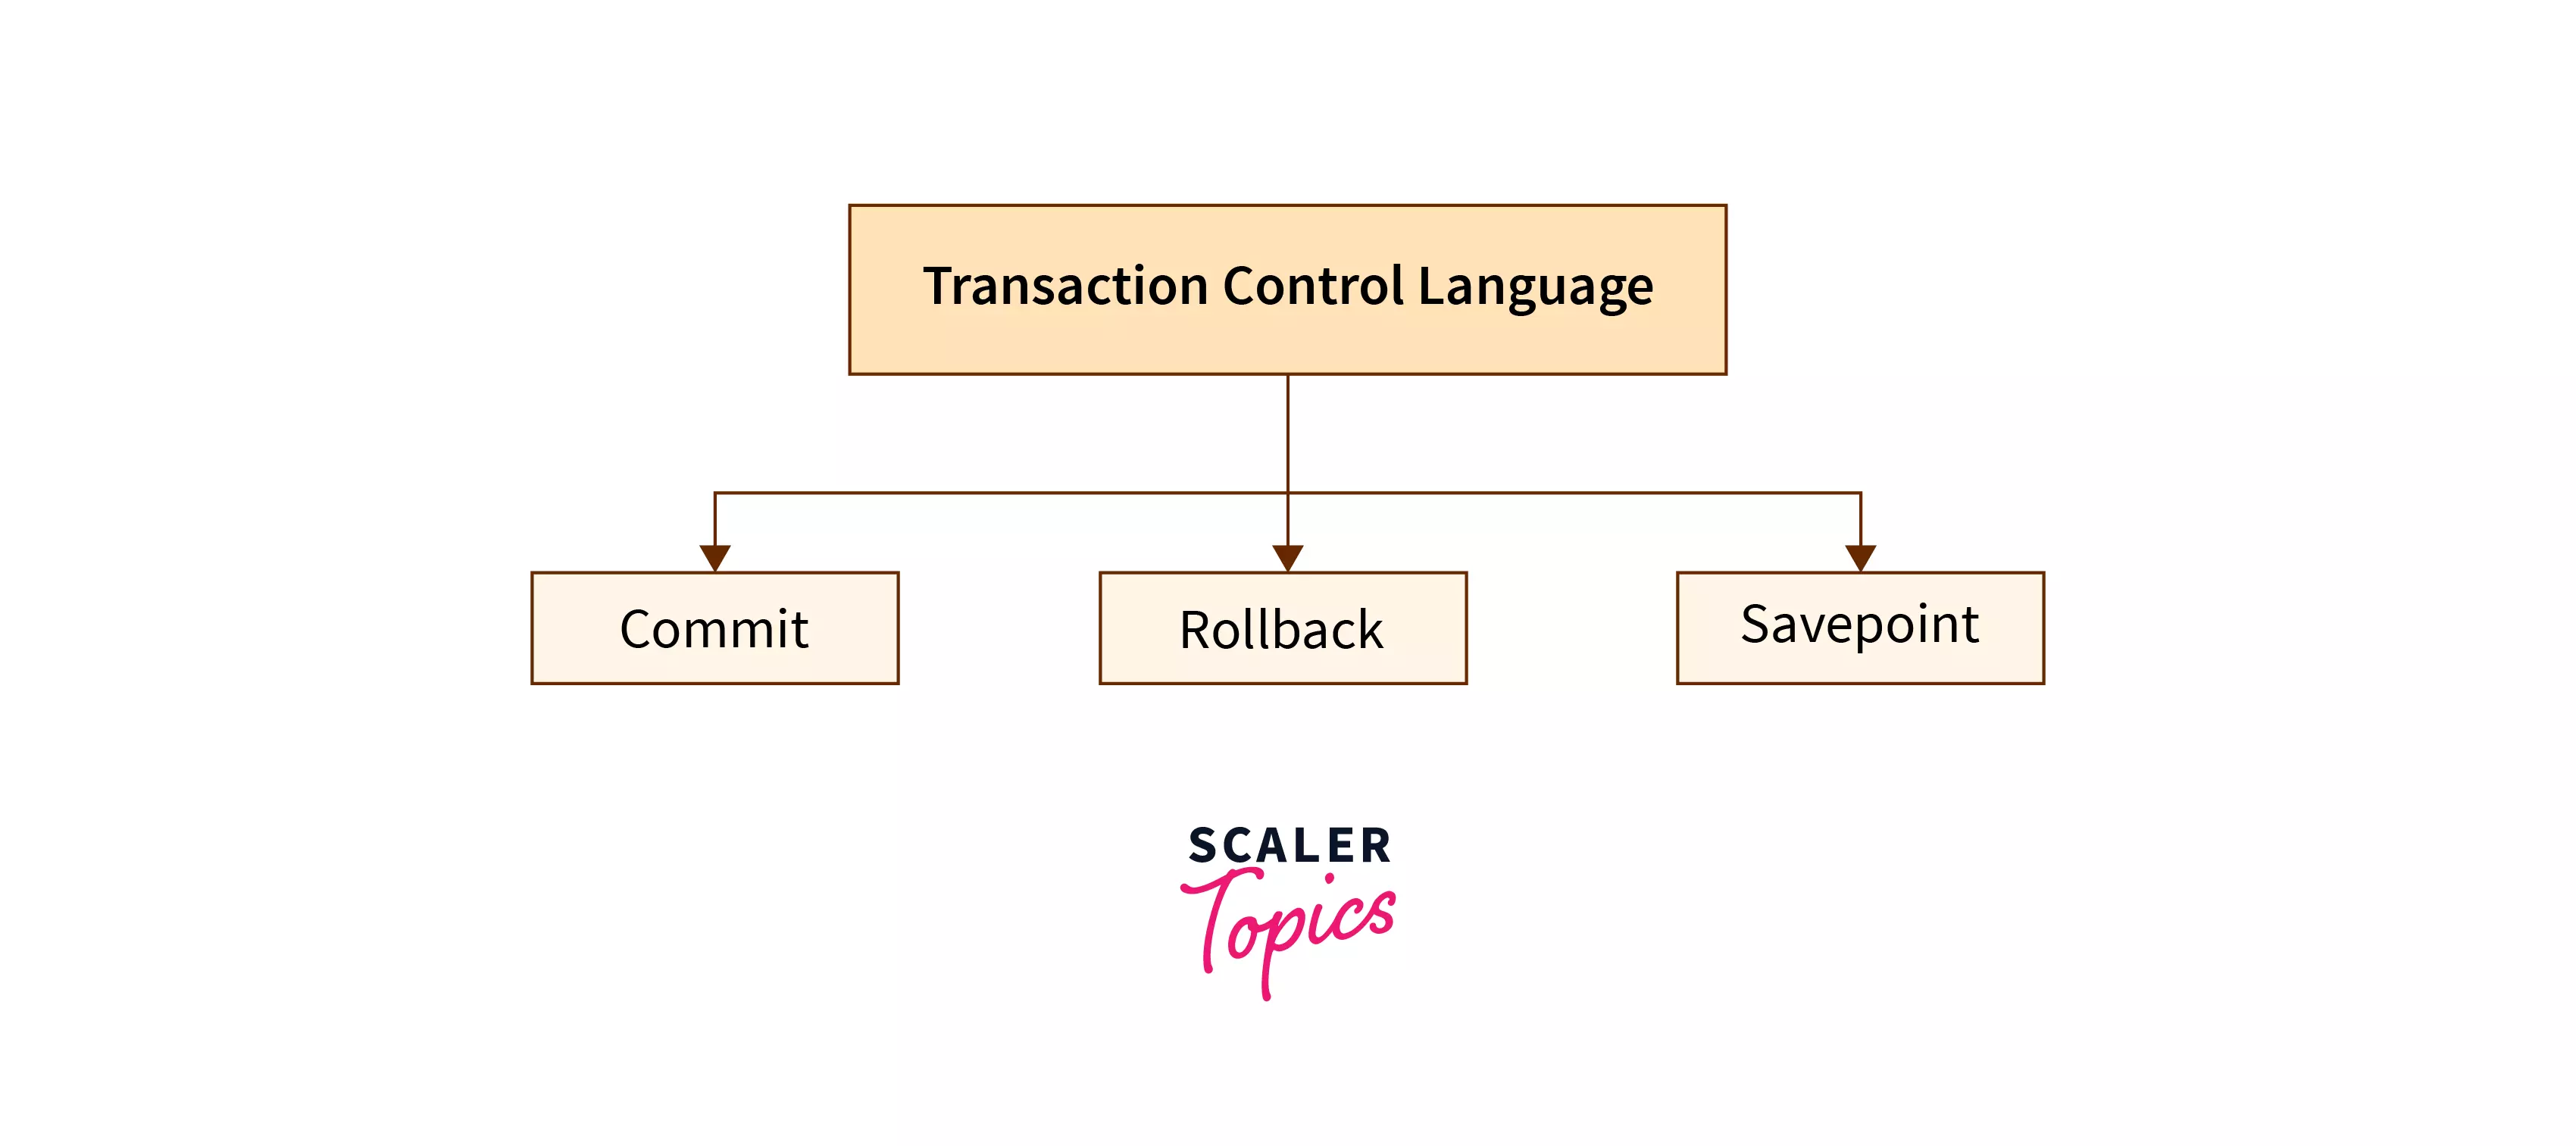 Transaction control languages